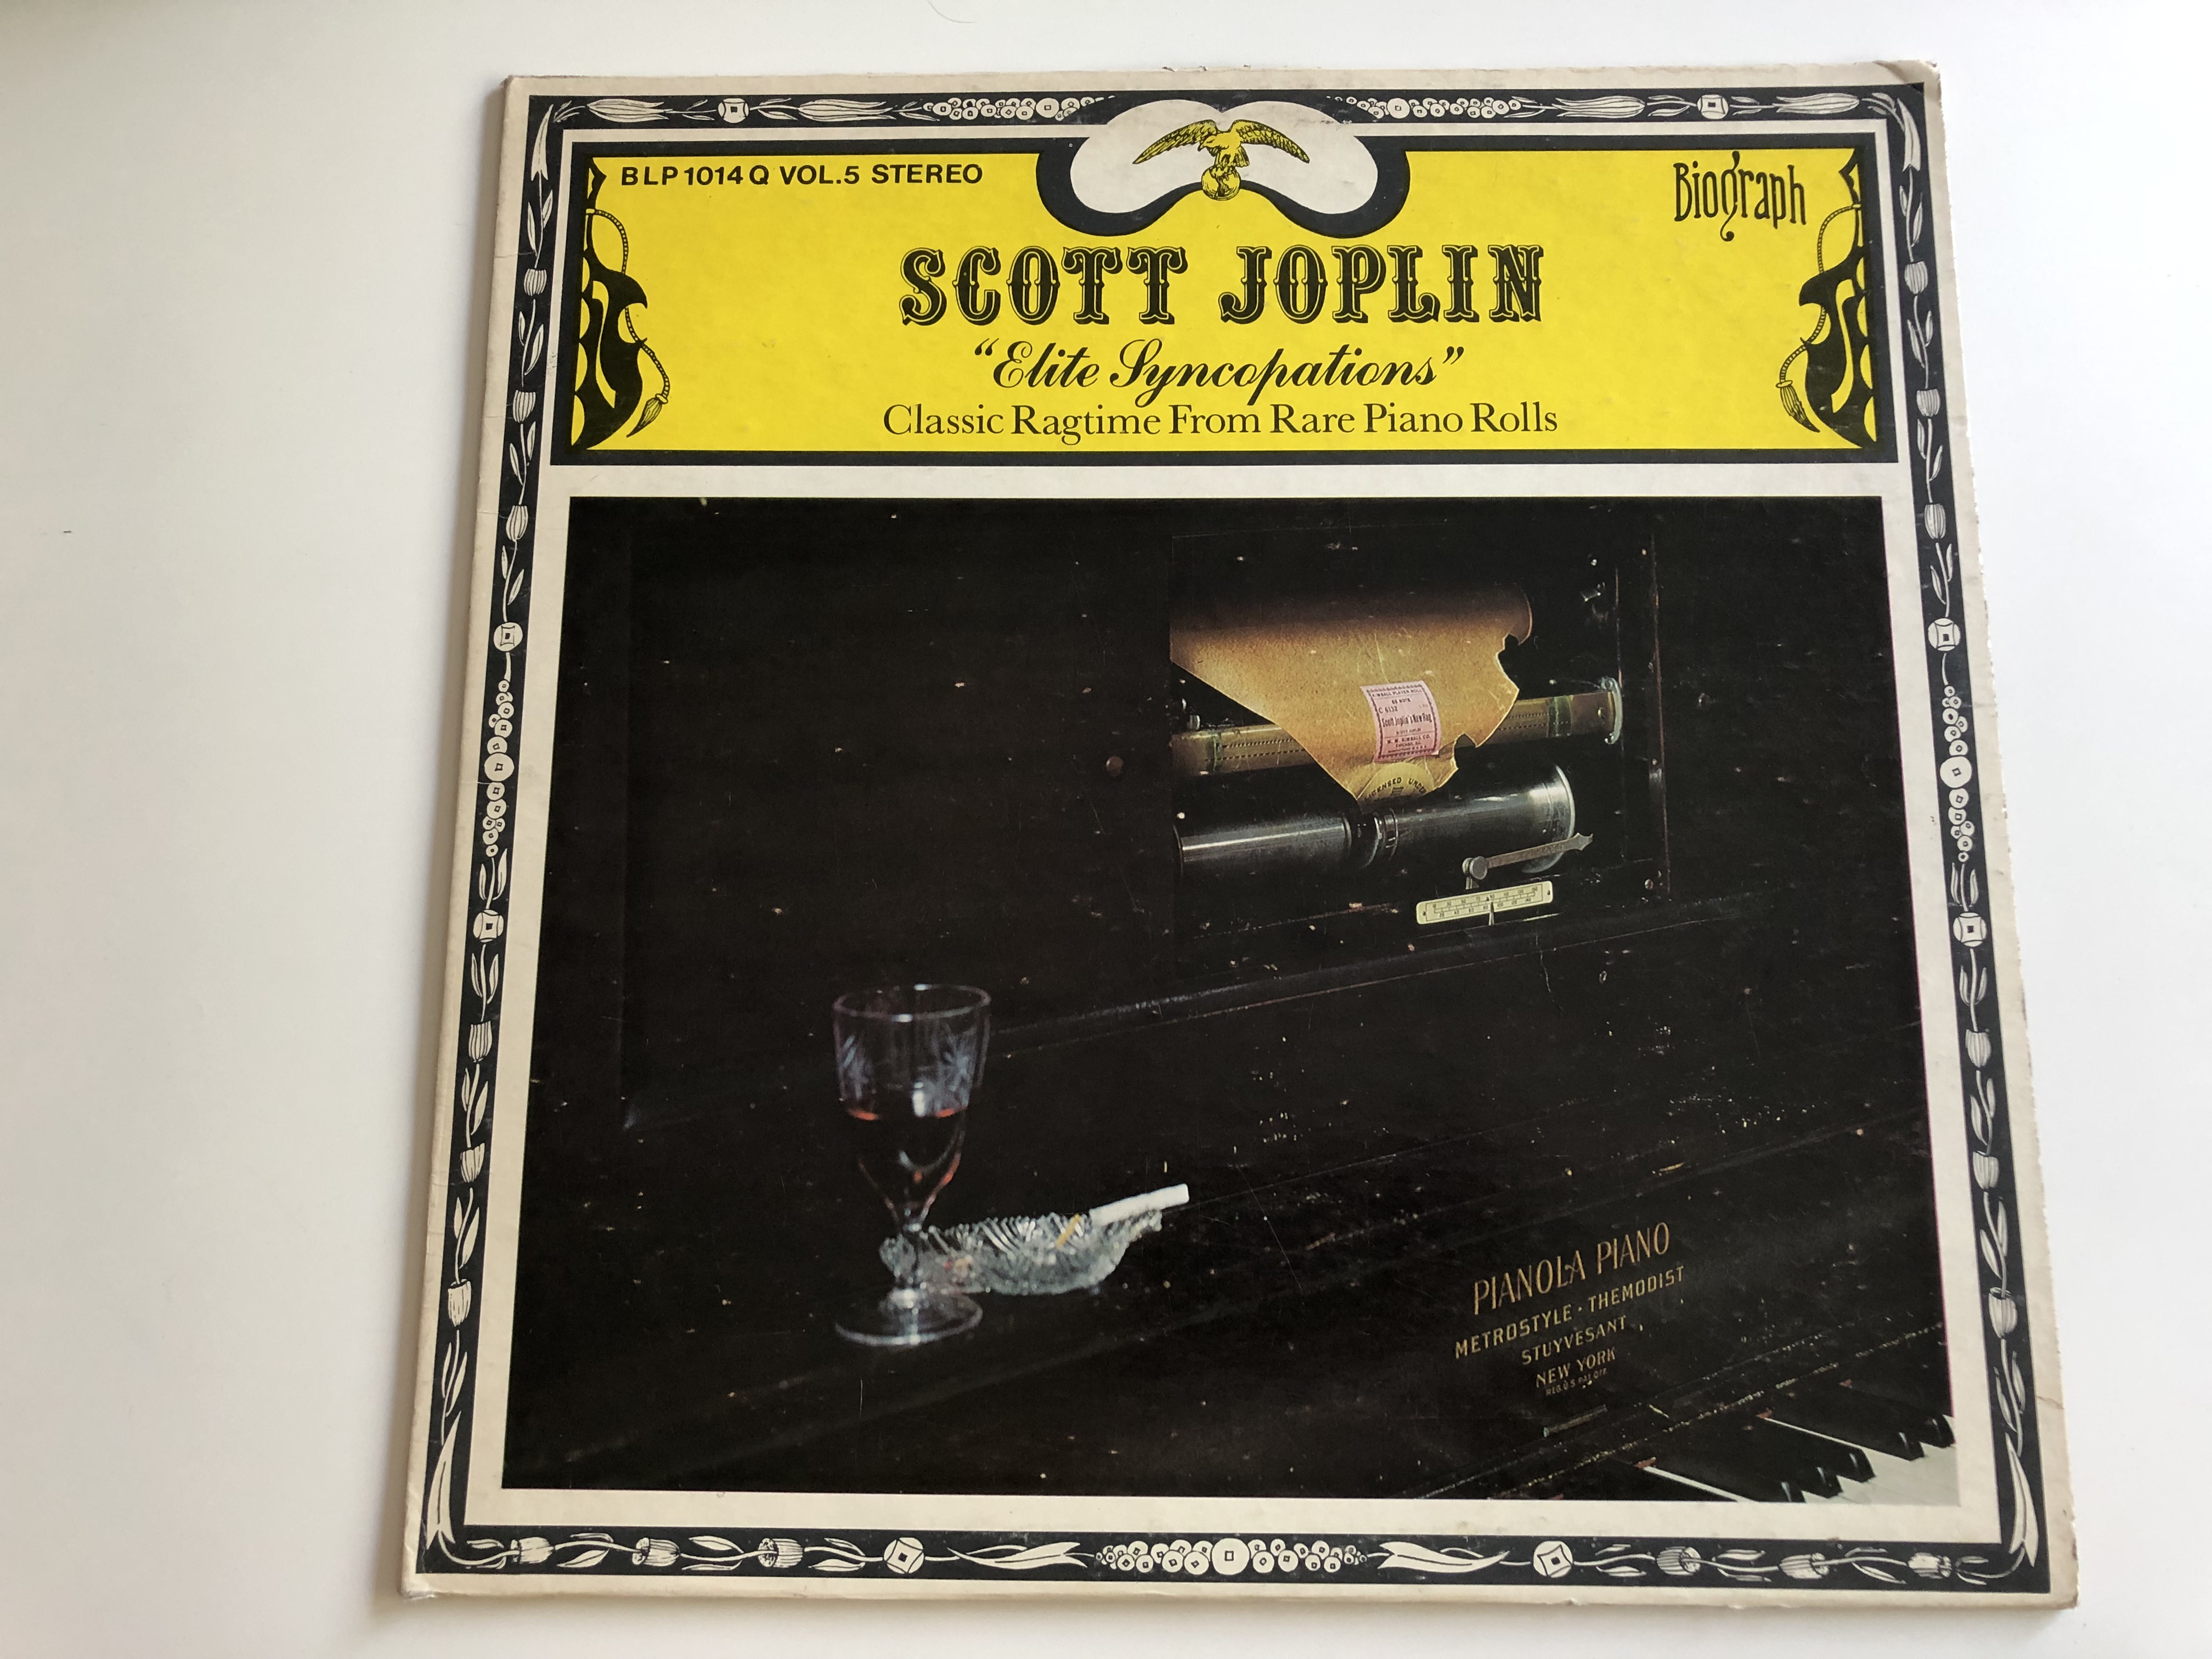 Scott Joplin ‎– Elite Syncopations / Classic Ragtime From Rare Piano Rolls  Vol.5 / BIOGRAPH LP STEREO / BLP 1014Q - bibleinmylanguage